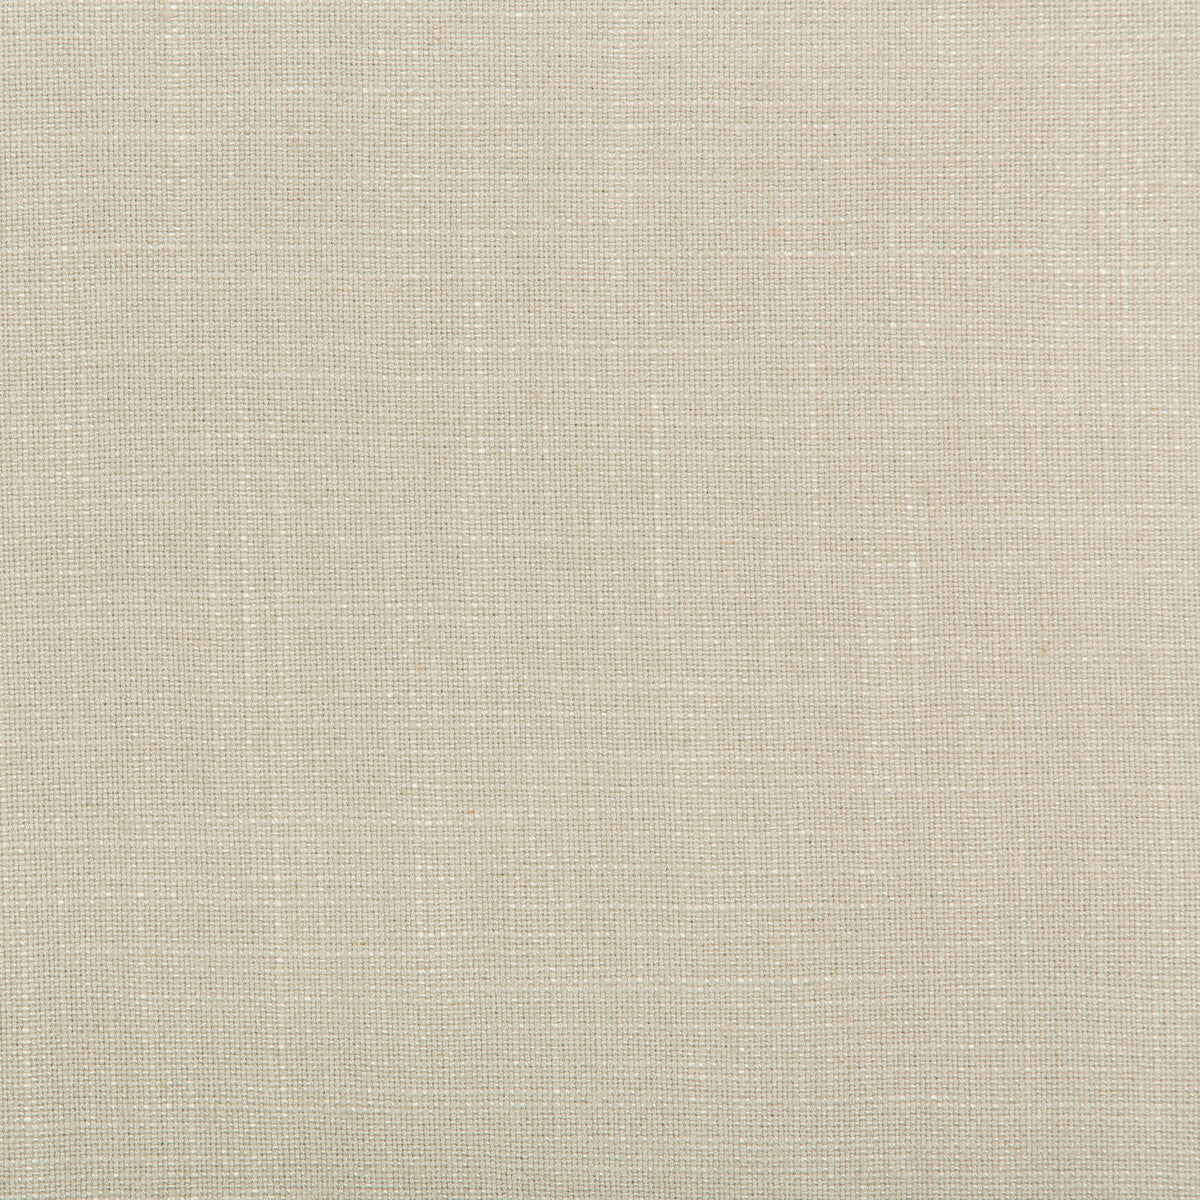 Aura fabric in rain color - pattern 35520.1101.0 - by Kravet Design